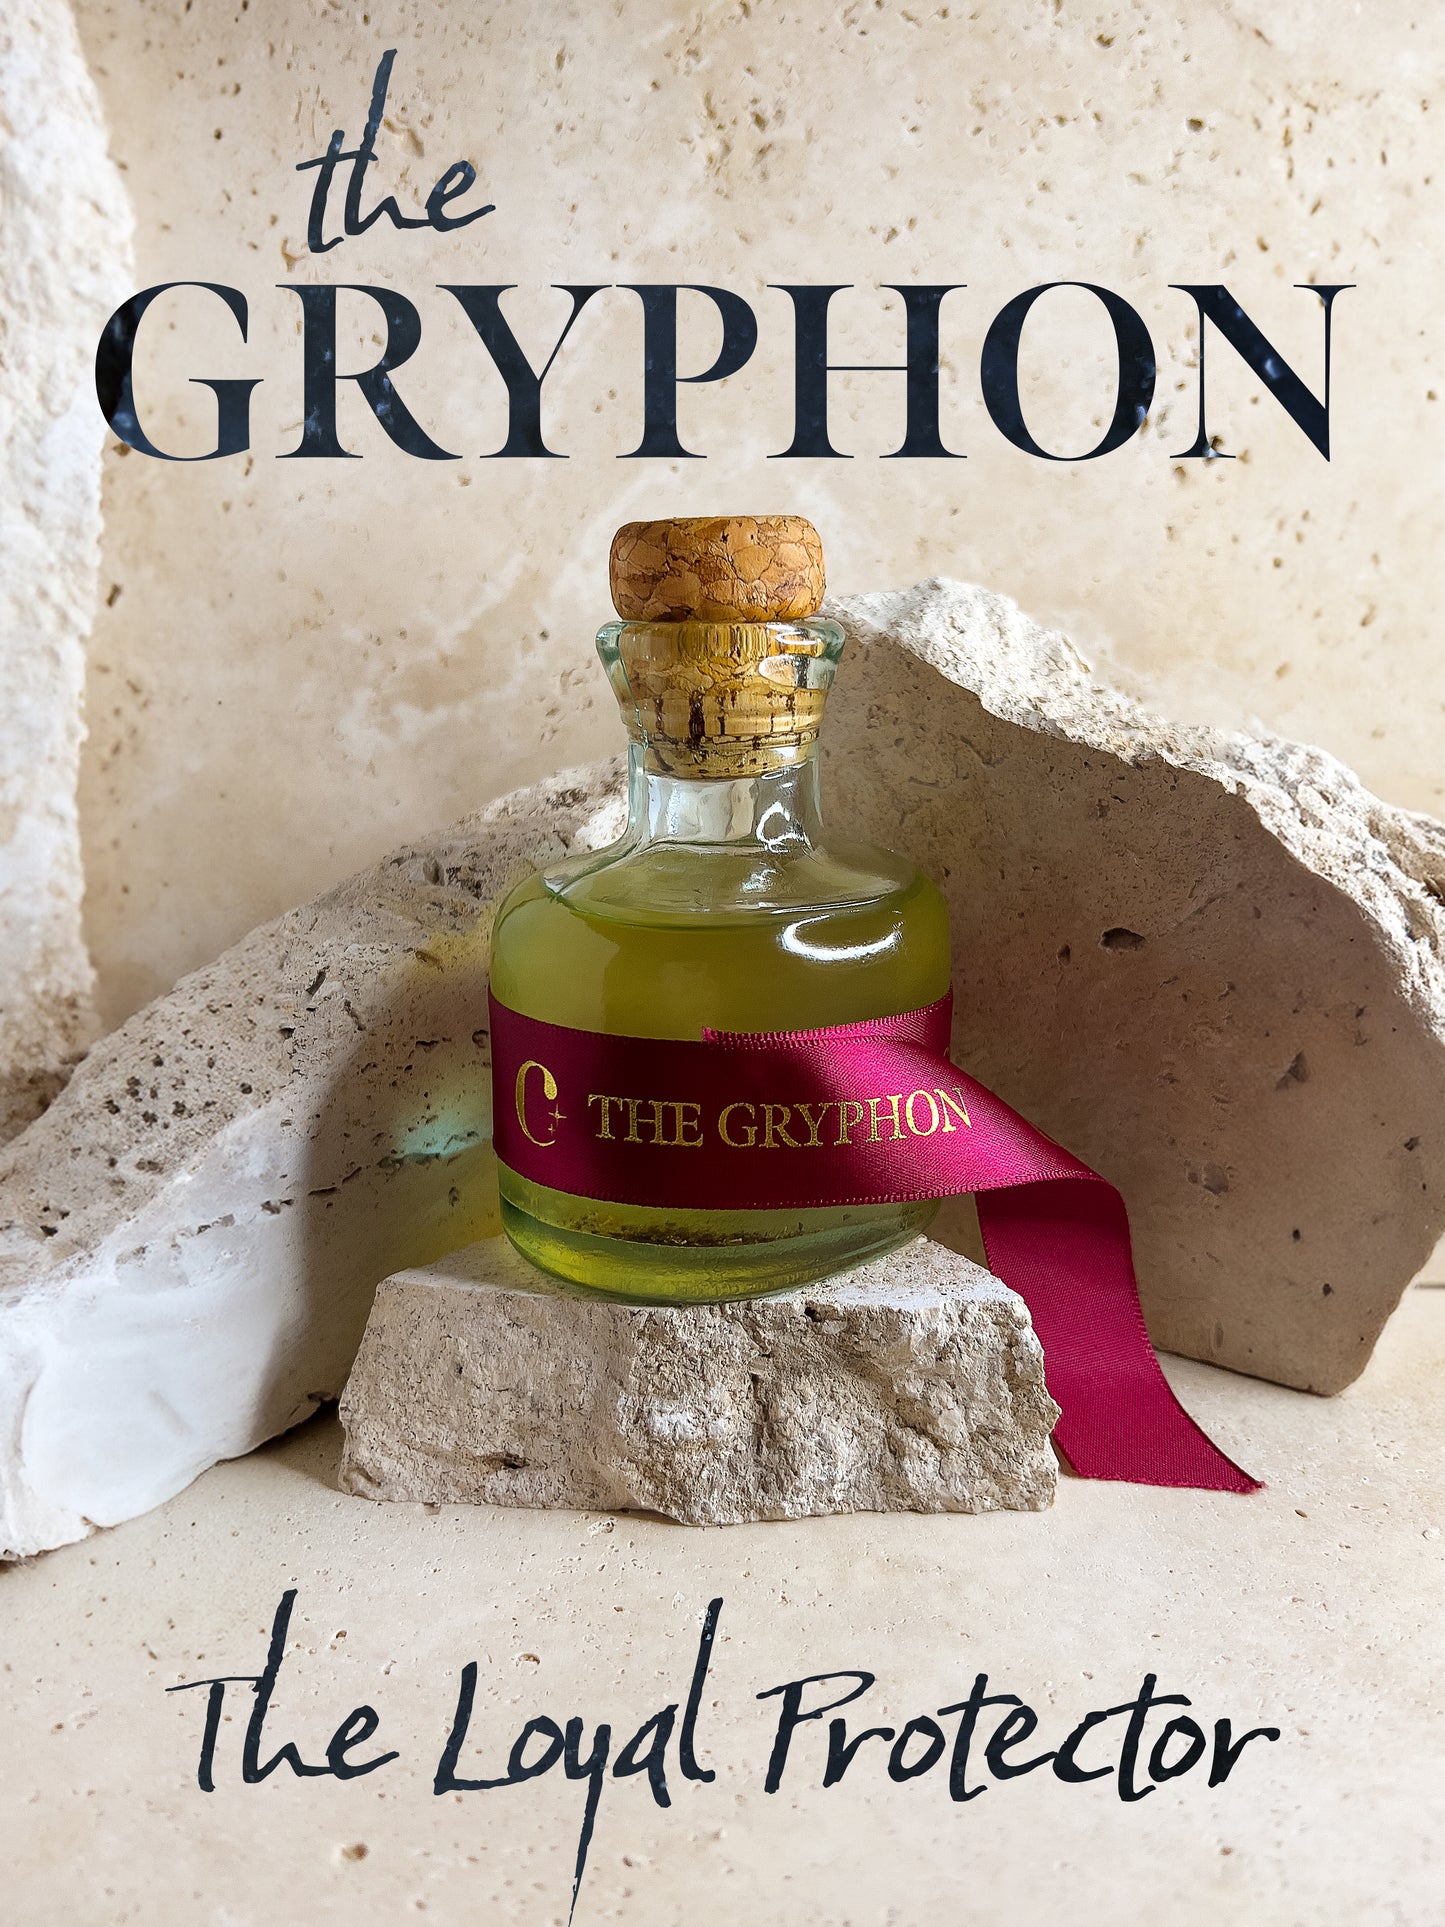 THE GRYPHON - The Loyal Protector